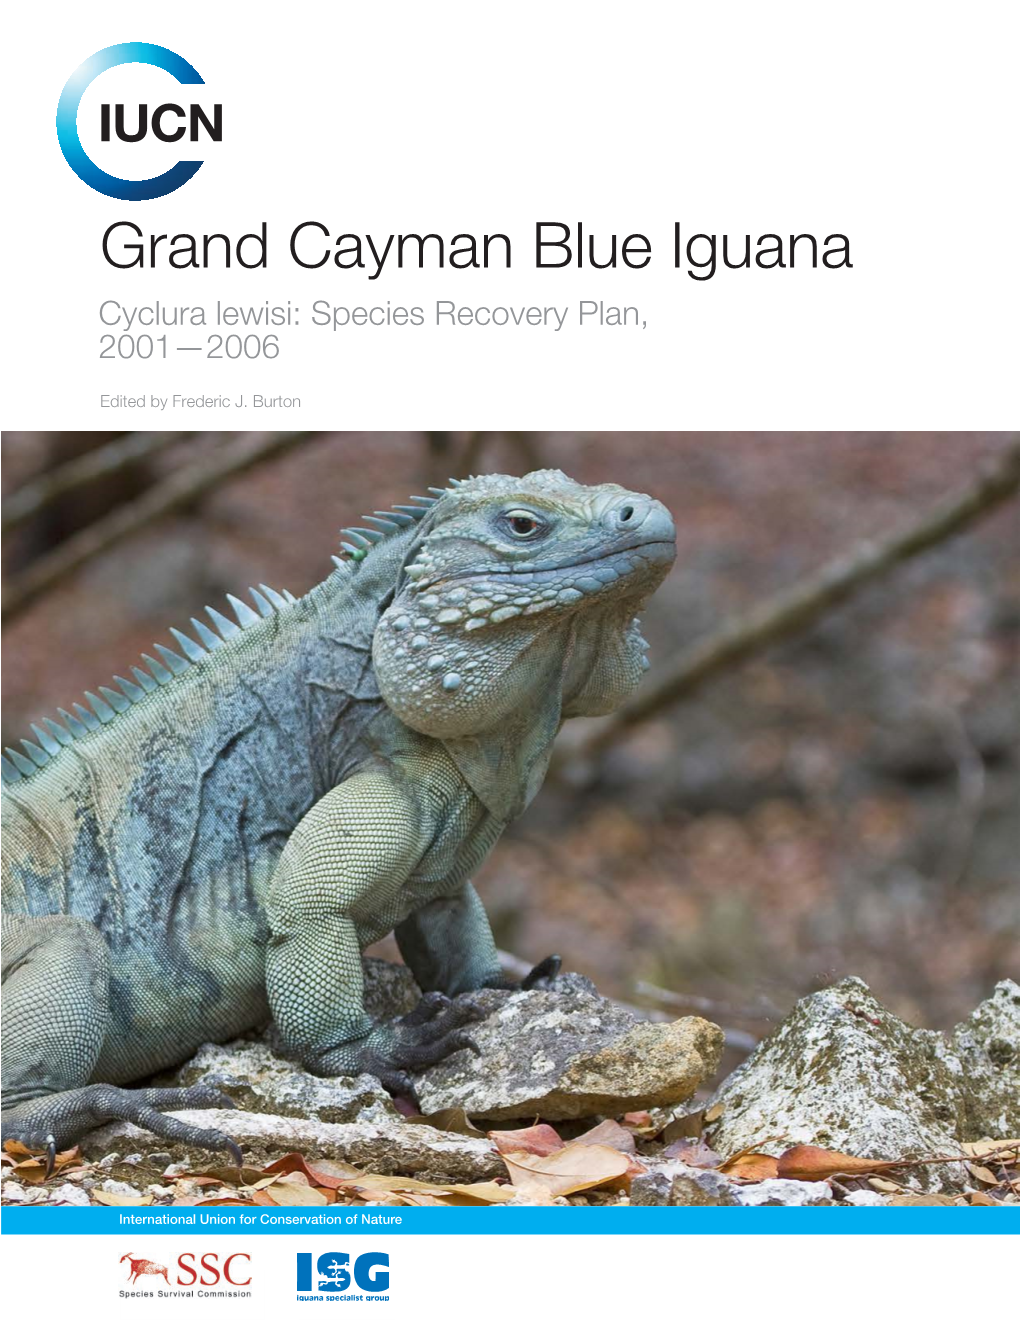 The Grand Cayman Blue Iguana